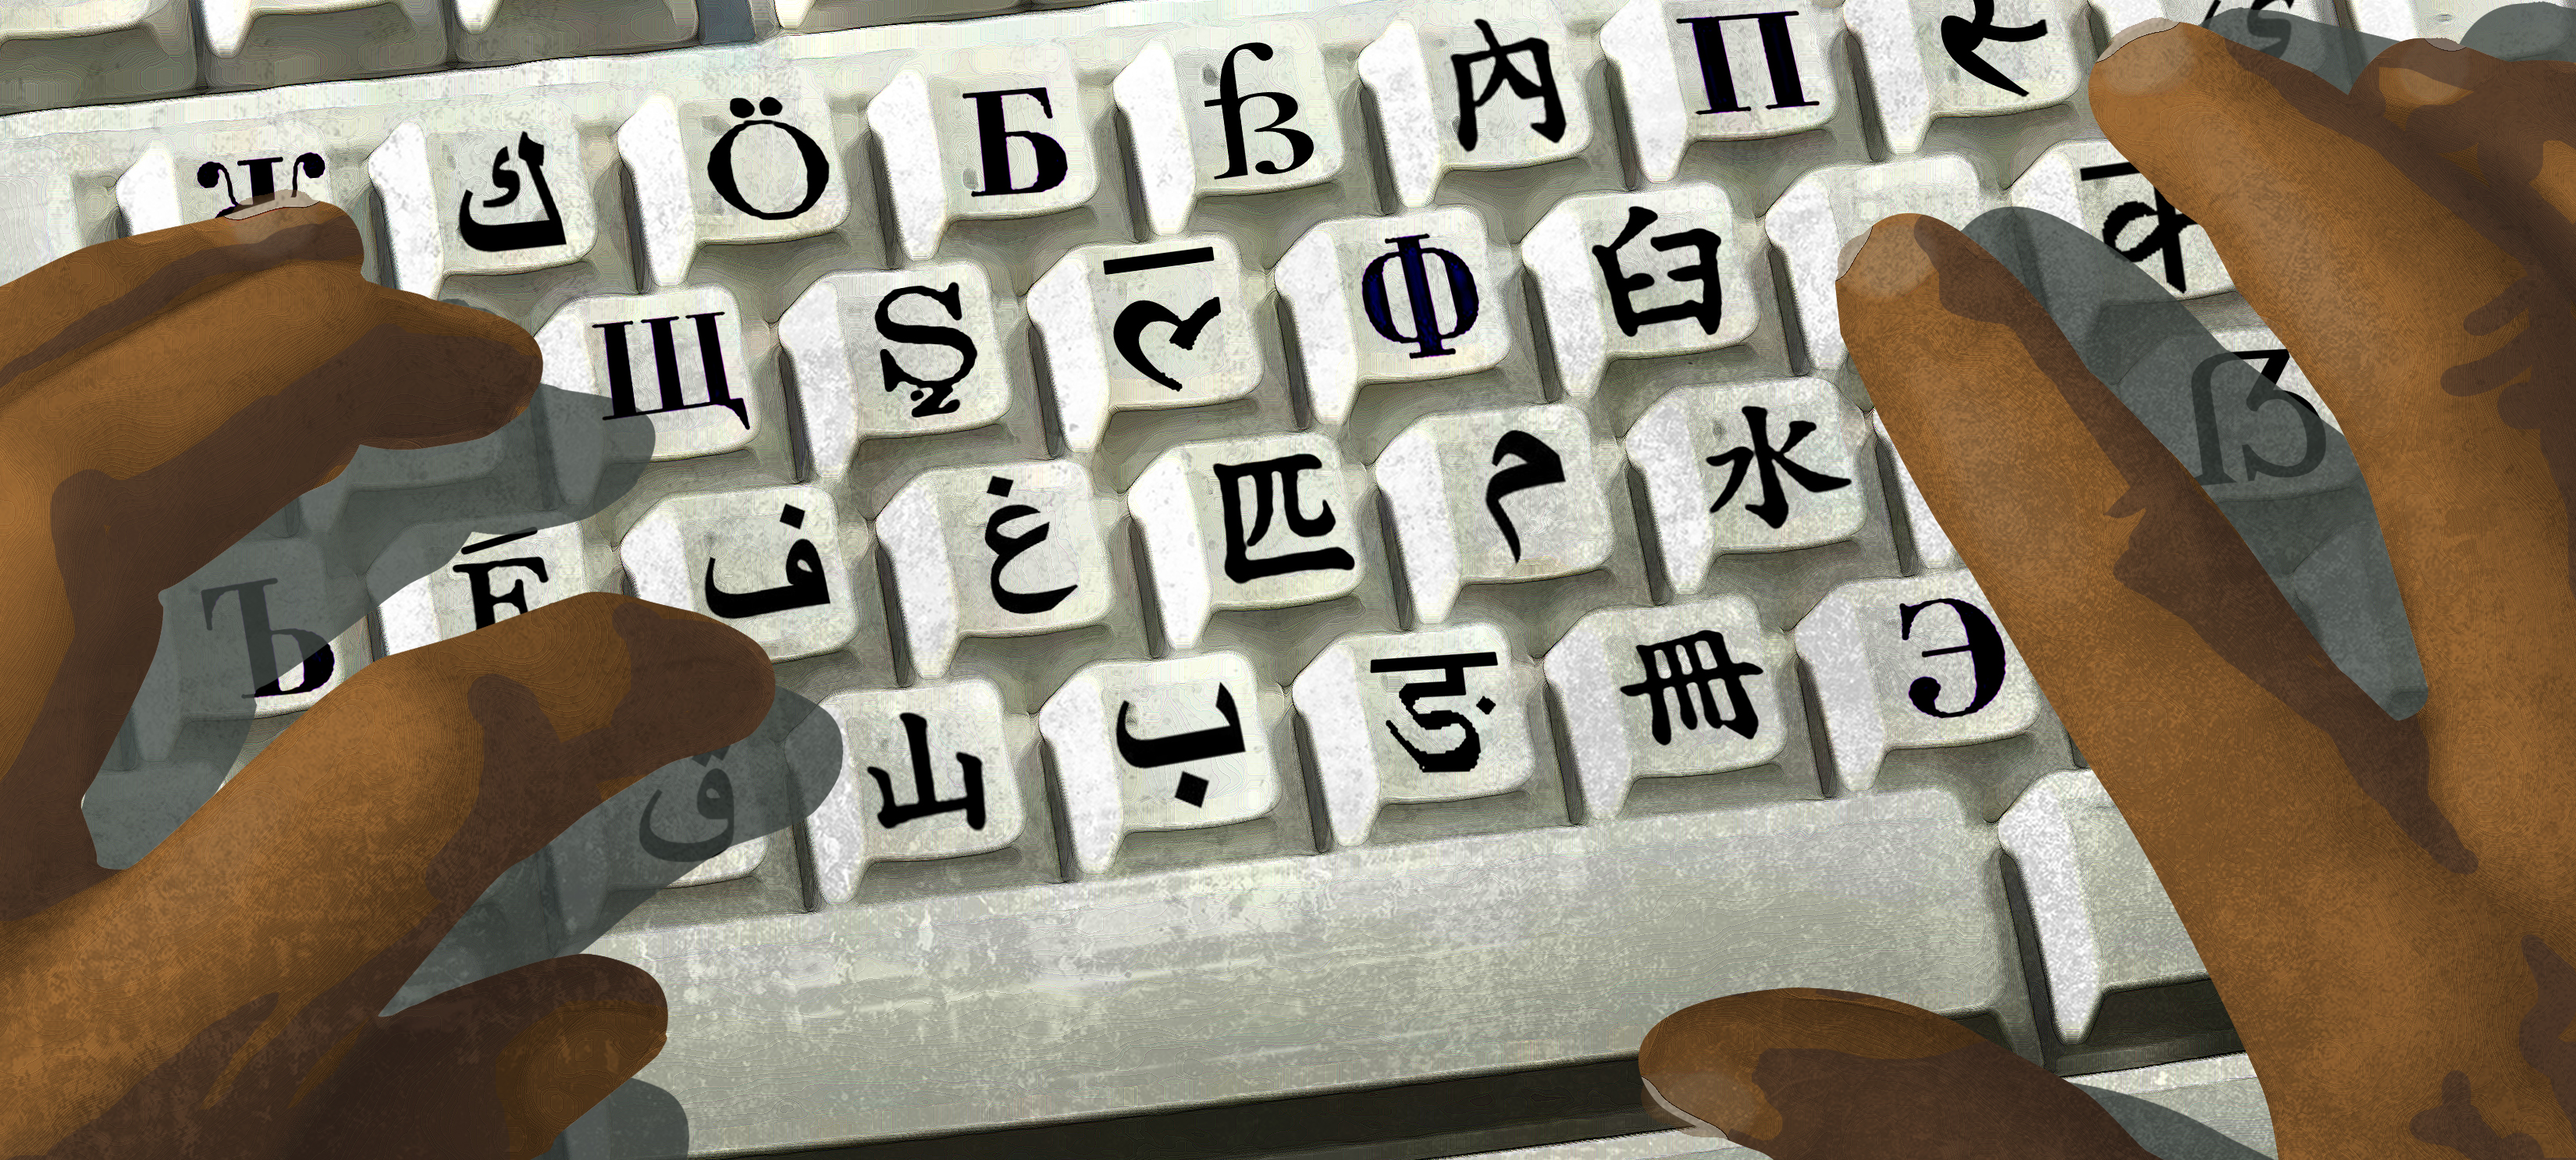 images of computer keyboard symbols